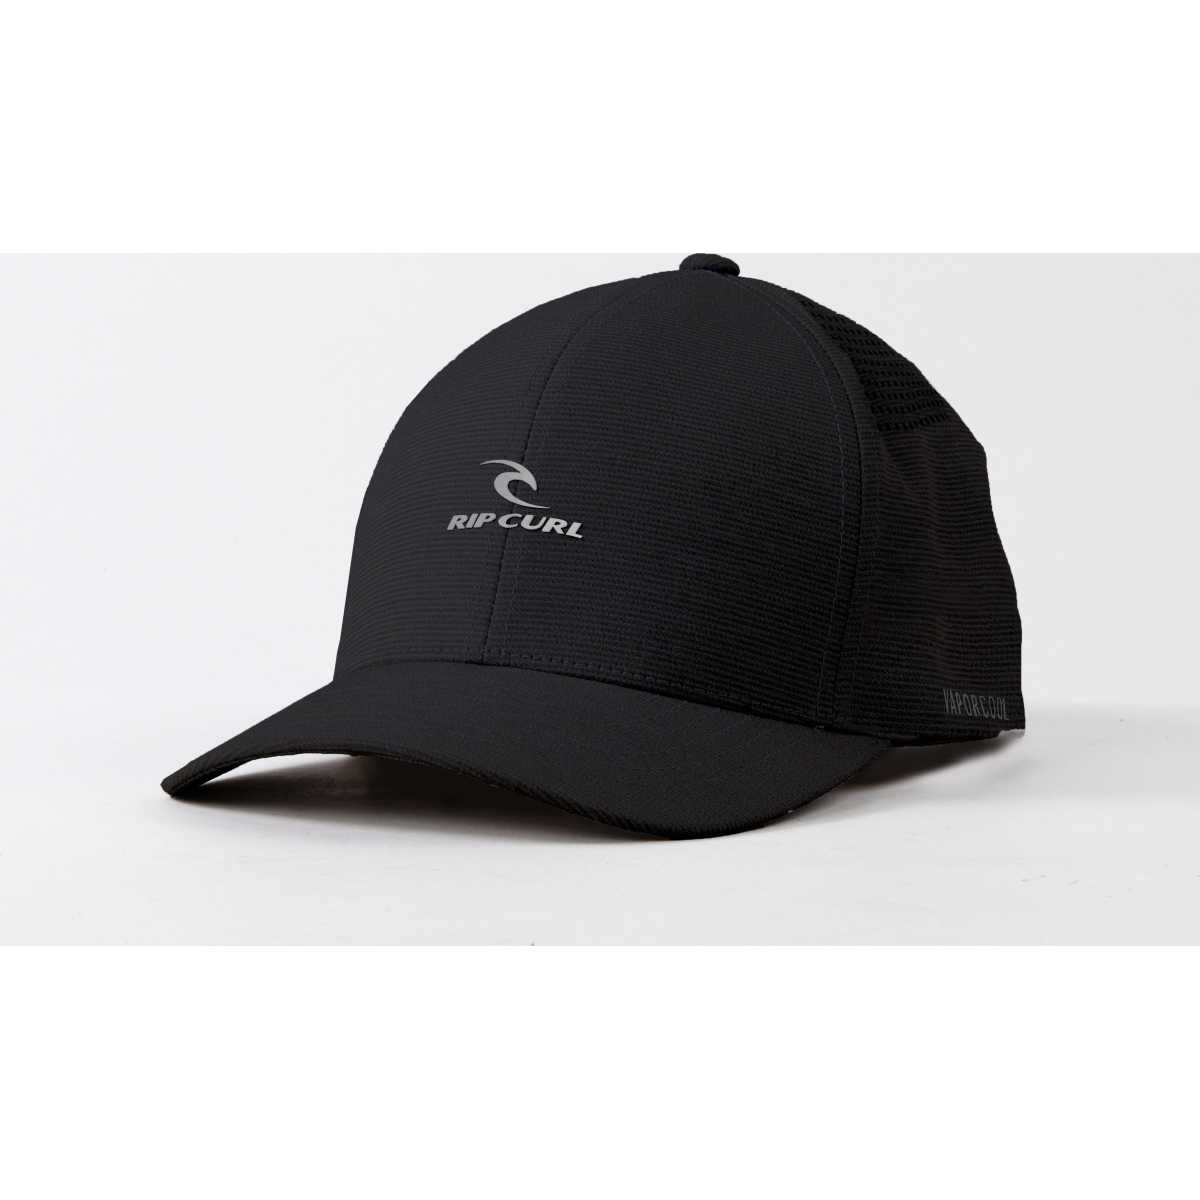 Vapor Flexfit Hat in Black